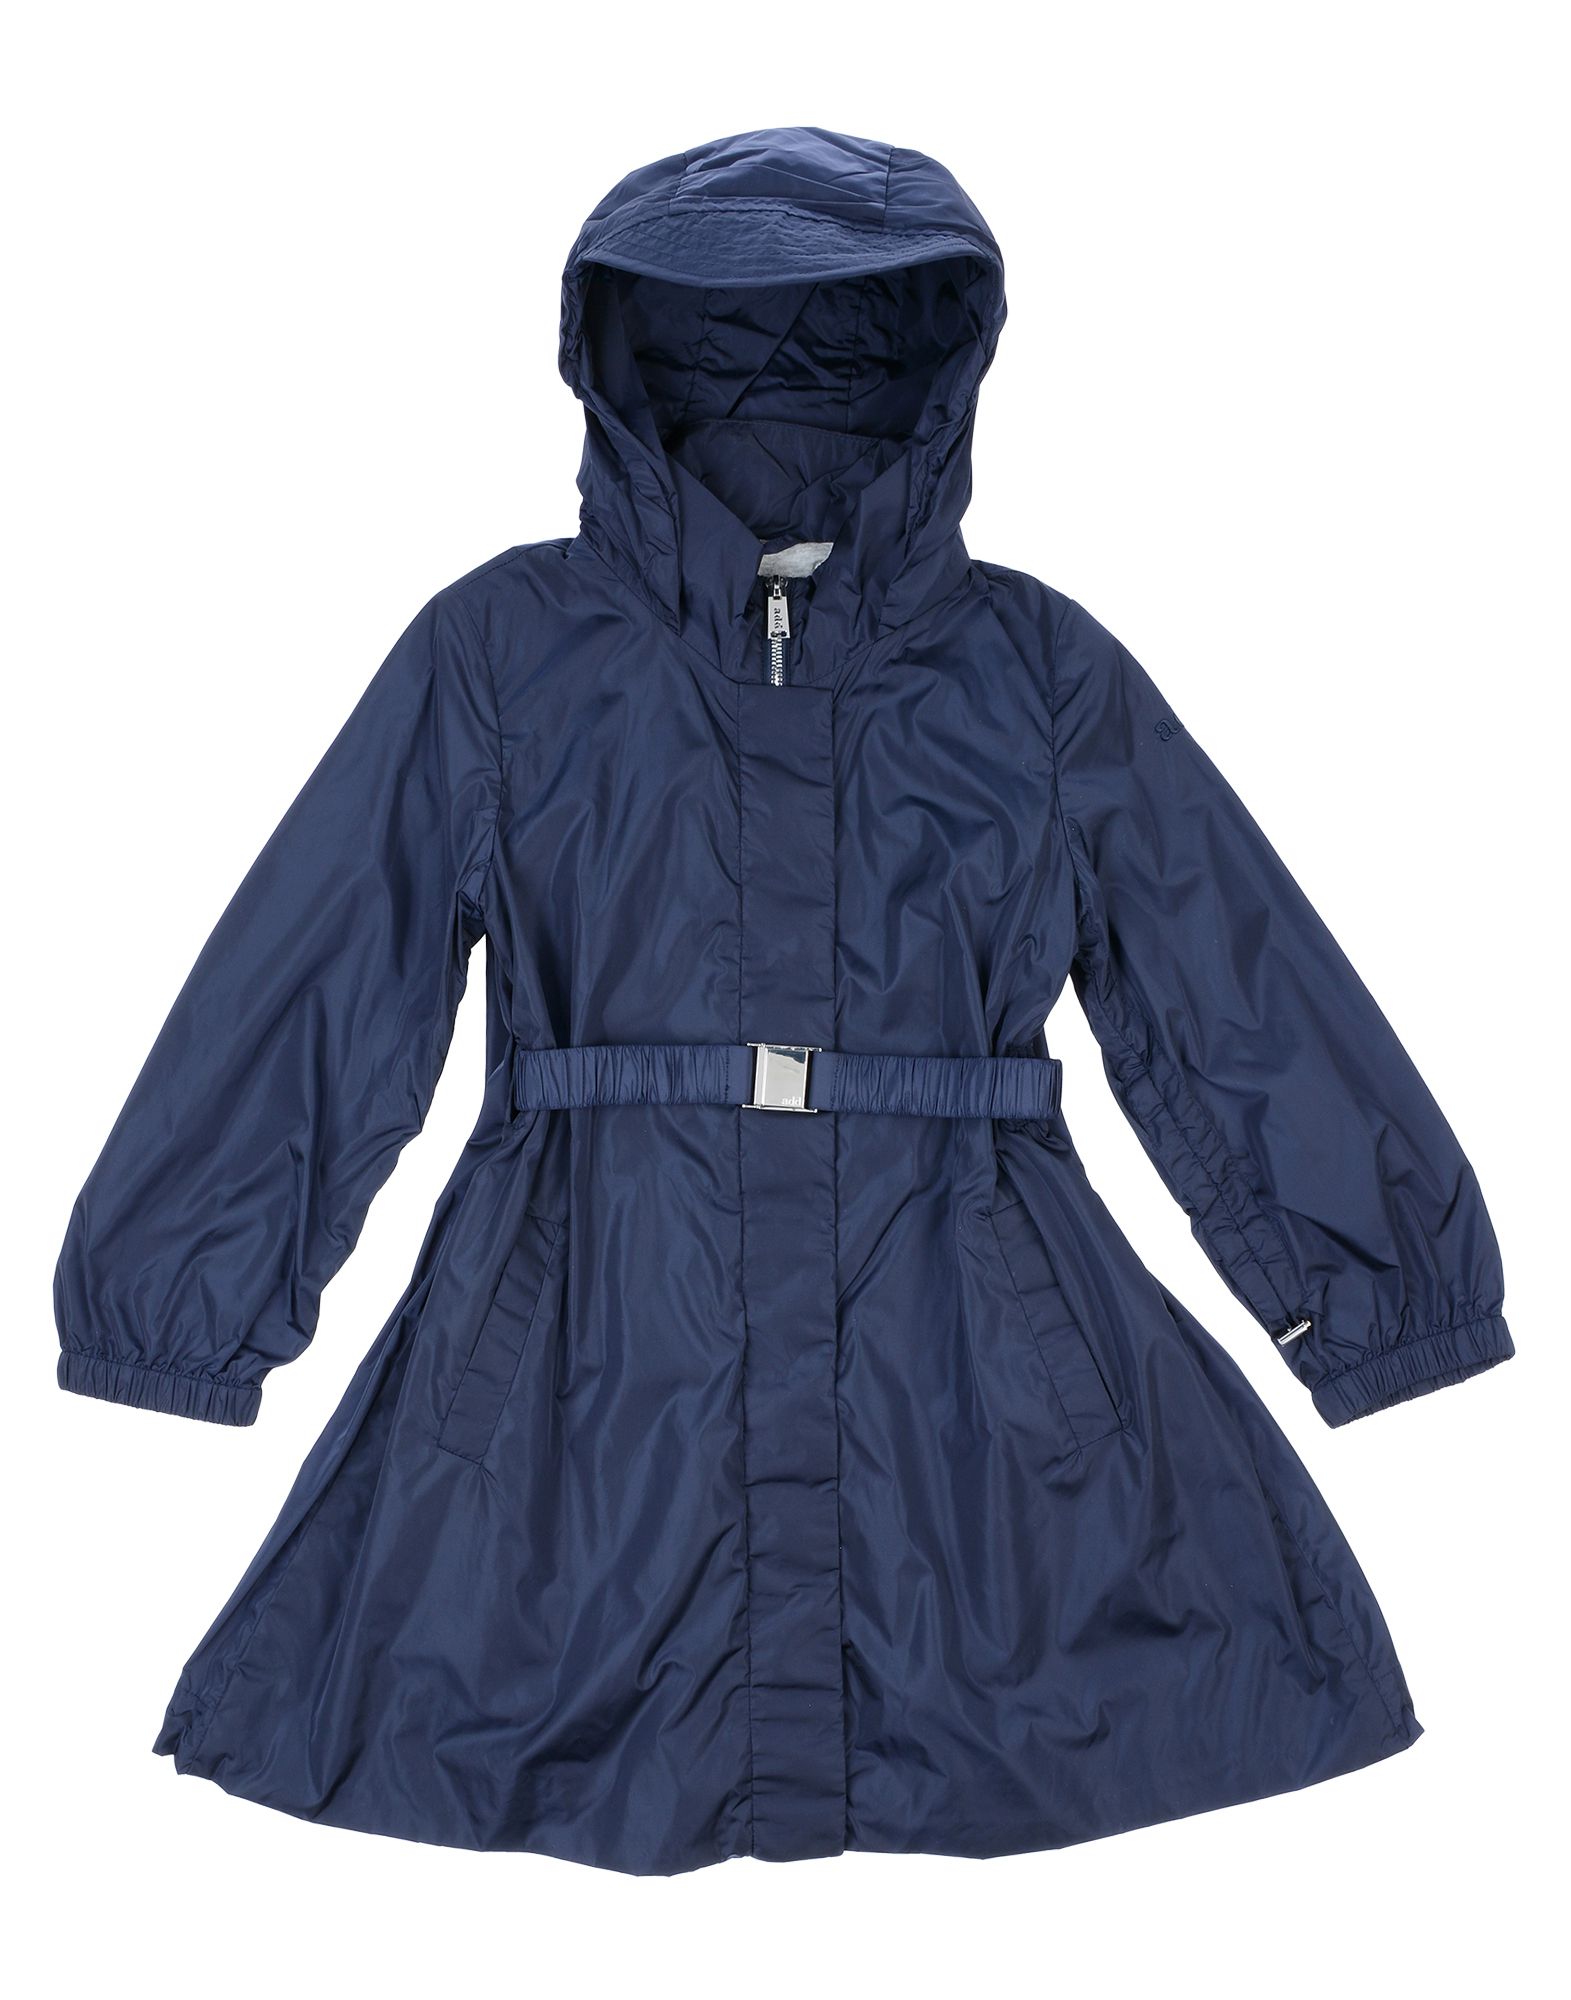 Add Kids' Overcoats In Dark Blue